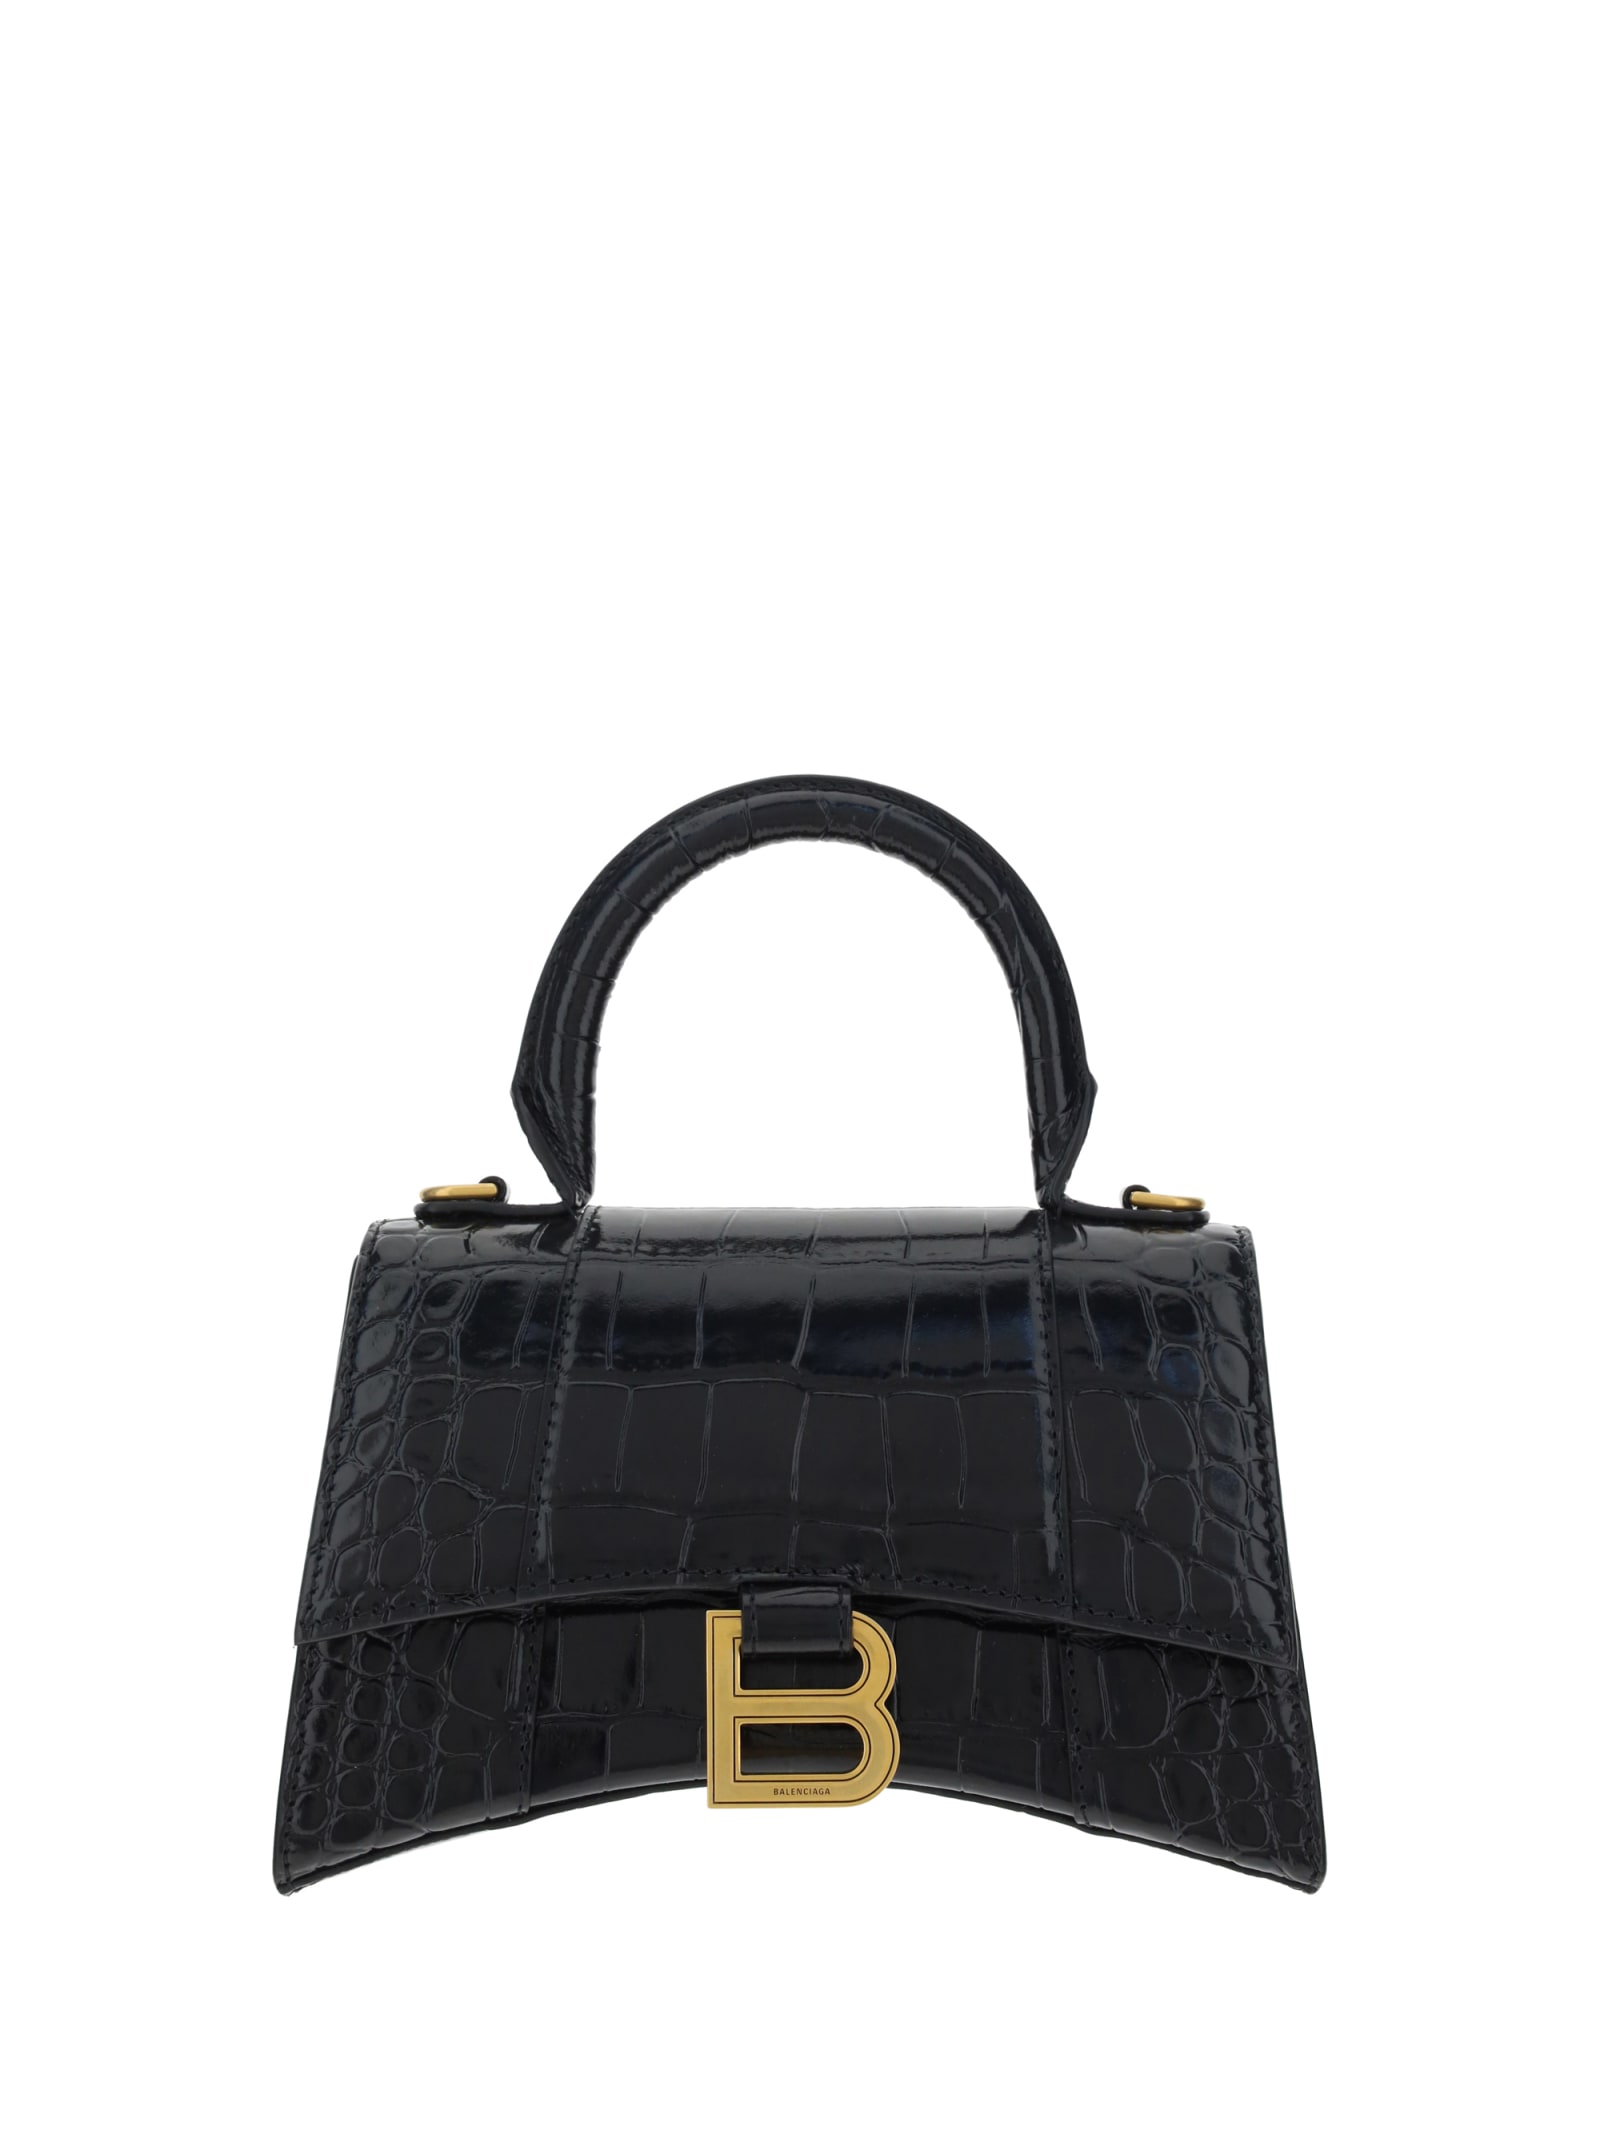 Balenciaga Hourglass Handbag In Black